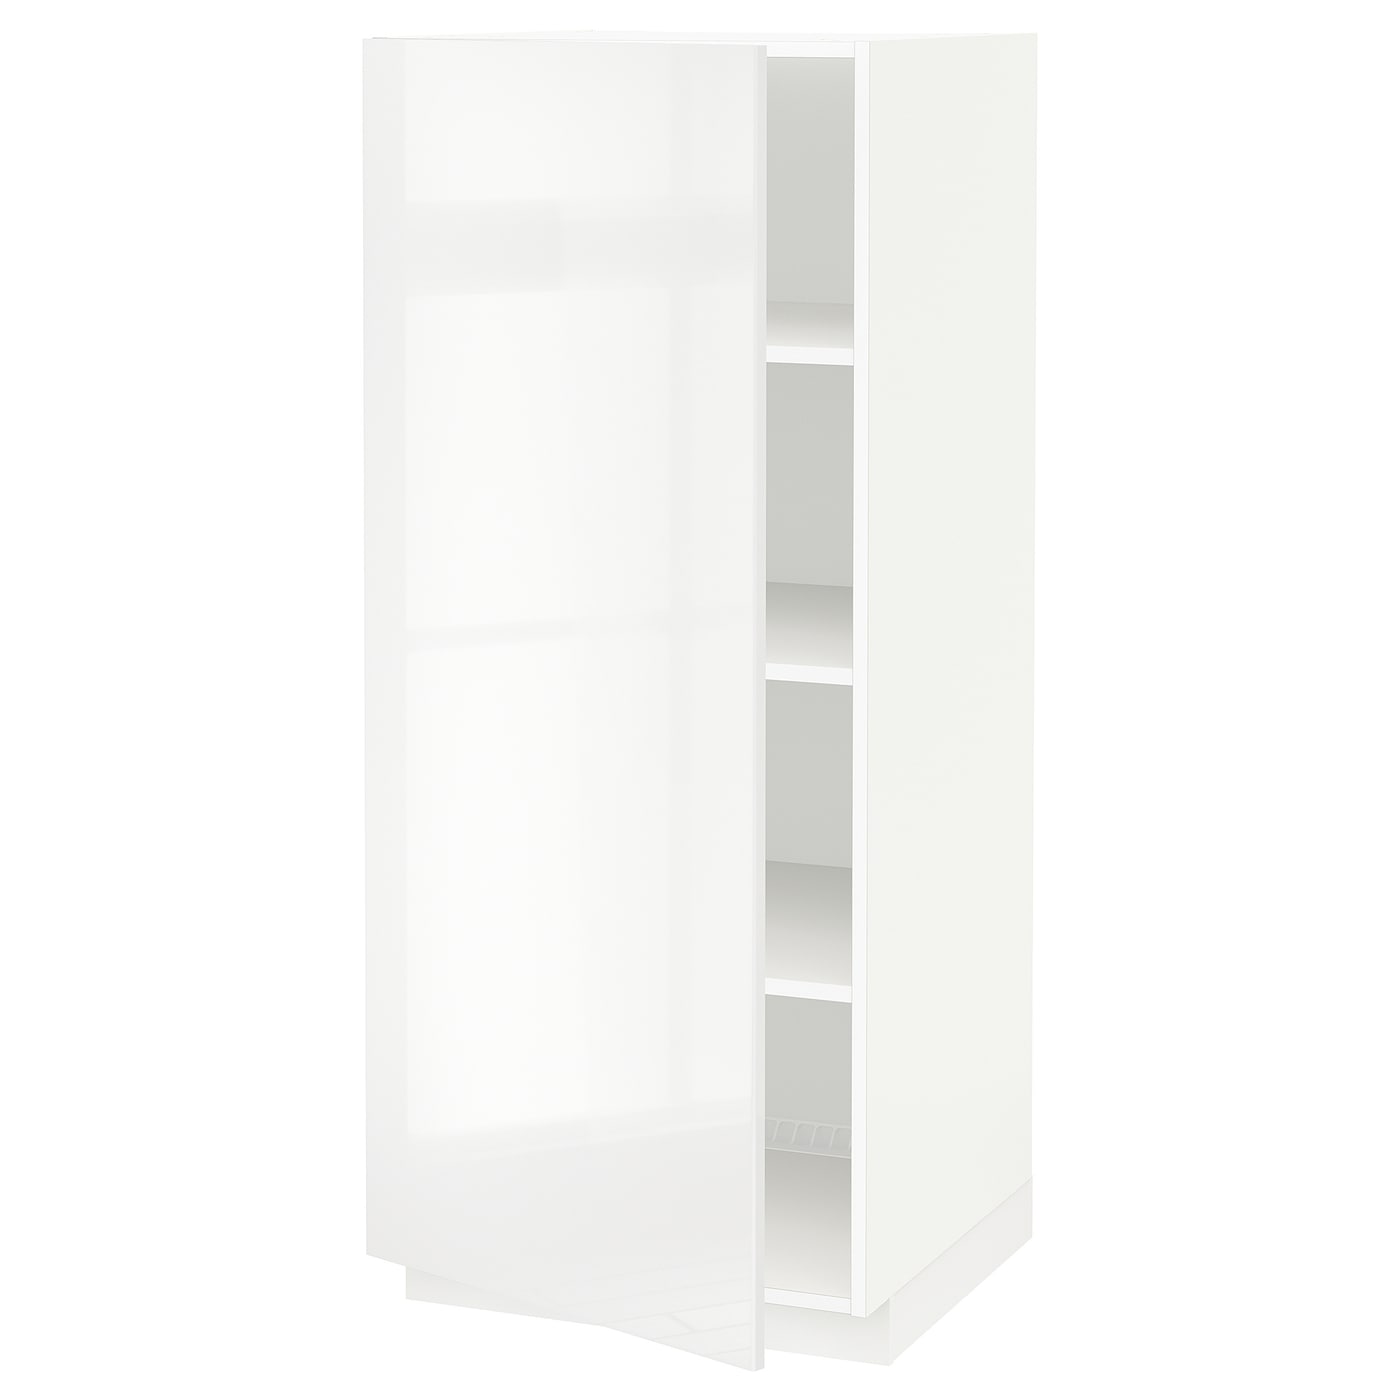 Напольный кухонный шкаф с полками - IKEA METOD/МЕТОД ИКЕА, 140х60х60 см, белый глянцевый